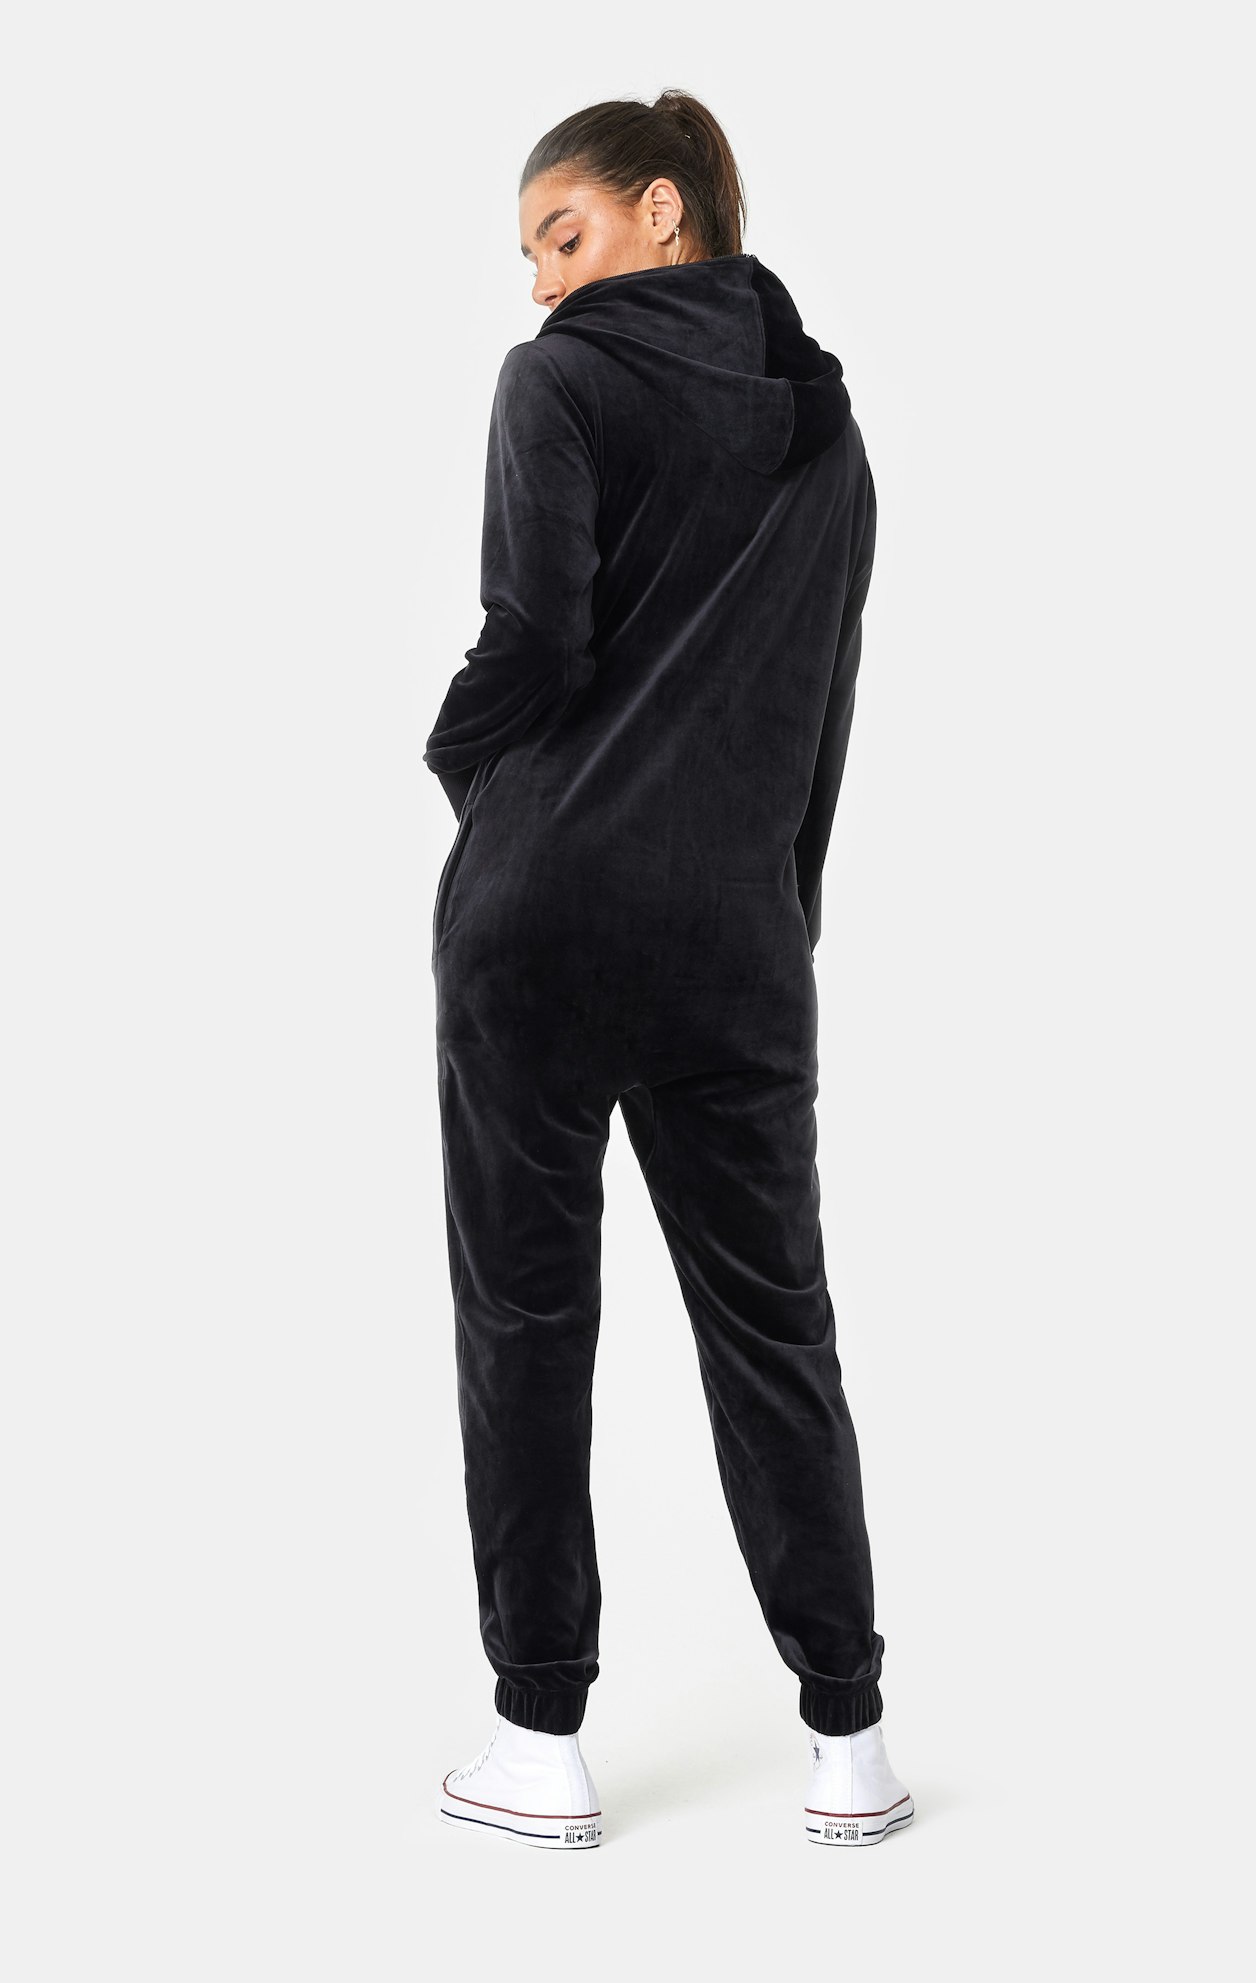 Original Velvet Jumpsuit Black 11 ?w=1256&h=2312&fit=crop&q=75